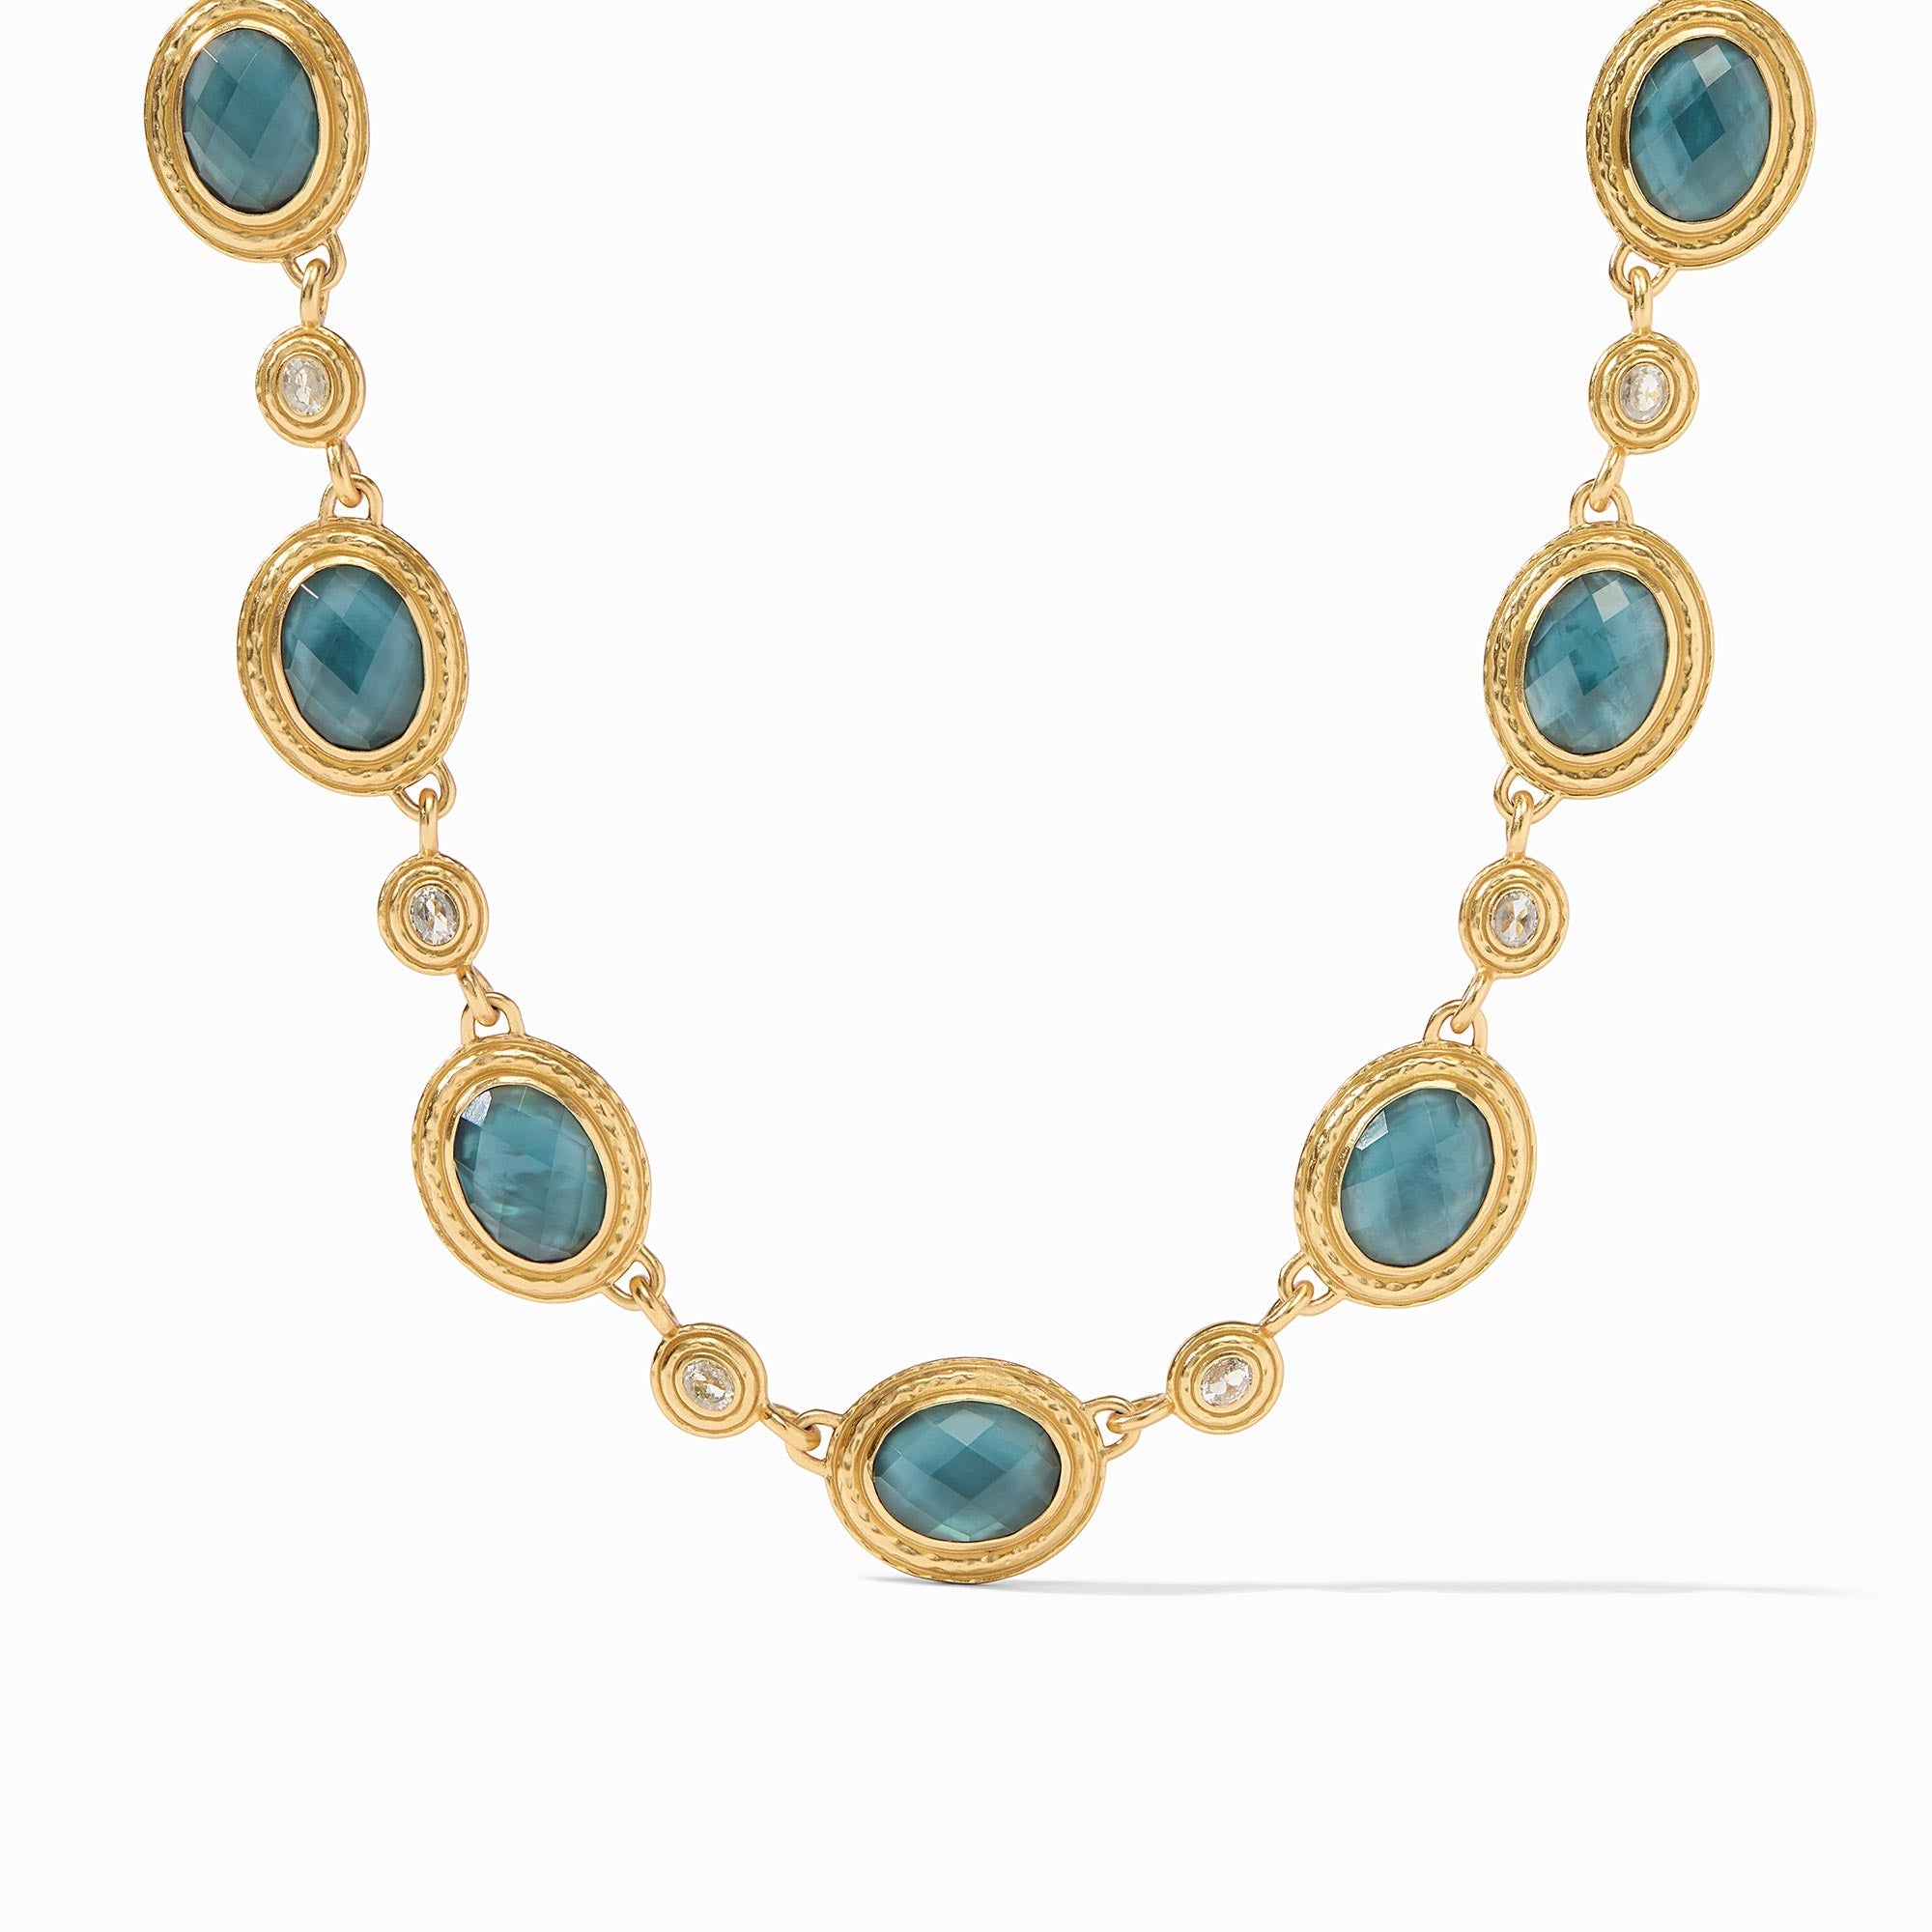 Julie Vos - Tudor Stone Necklace, Iridescent Peacock Blue